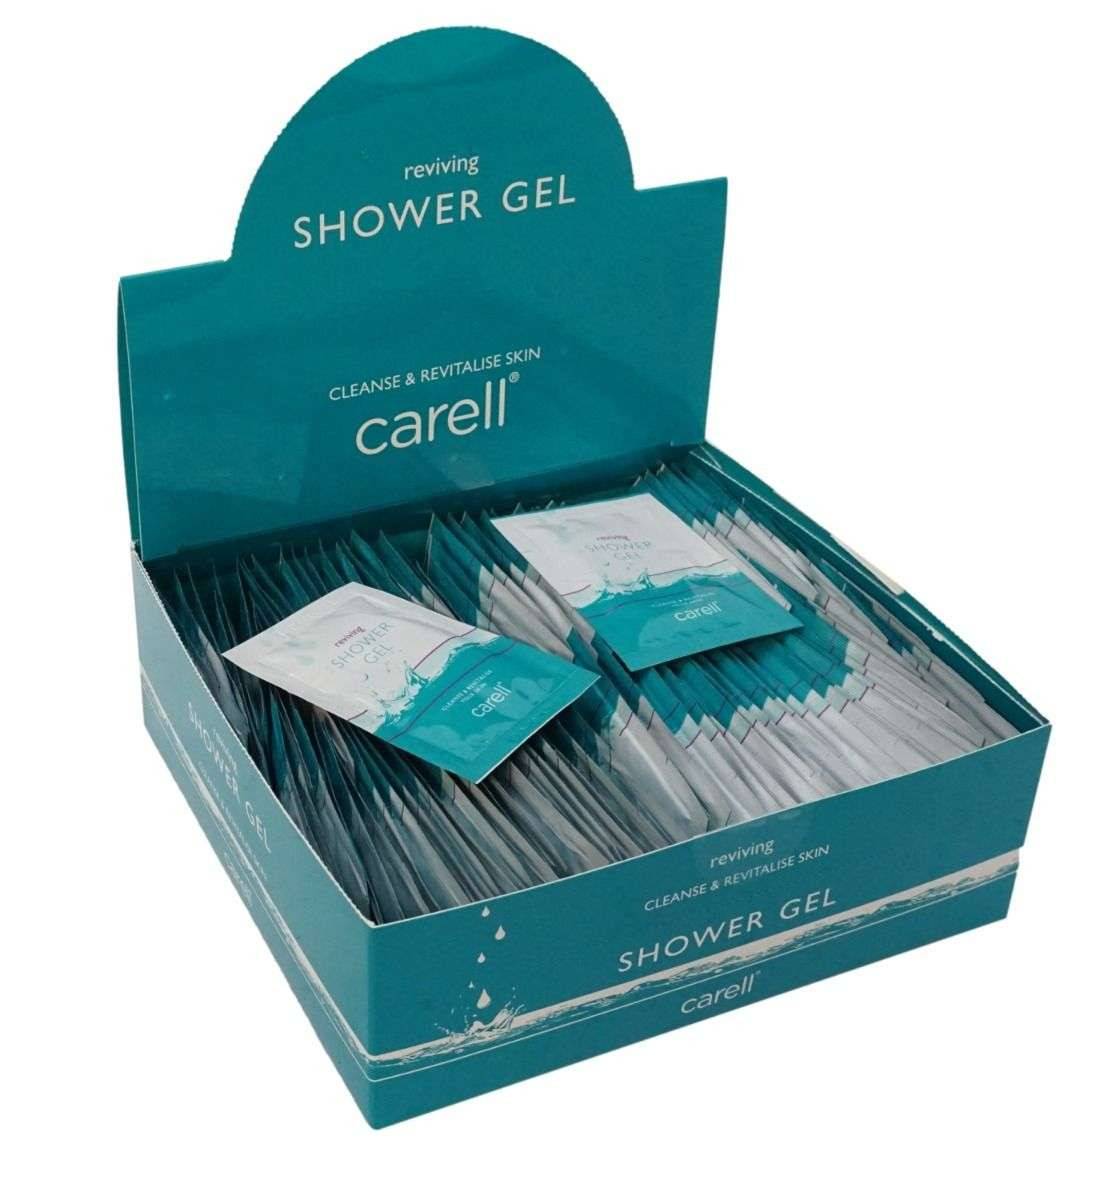 Carell Shower Gel 7ml sachets Box of 100 - UKMEDI